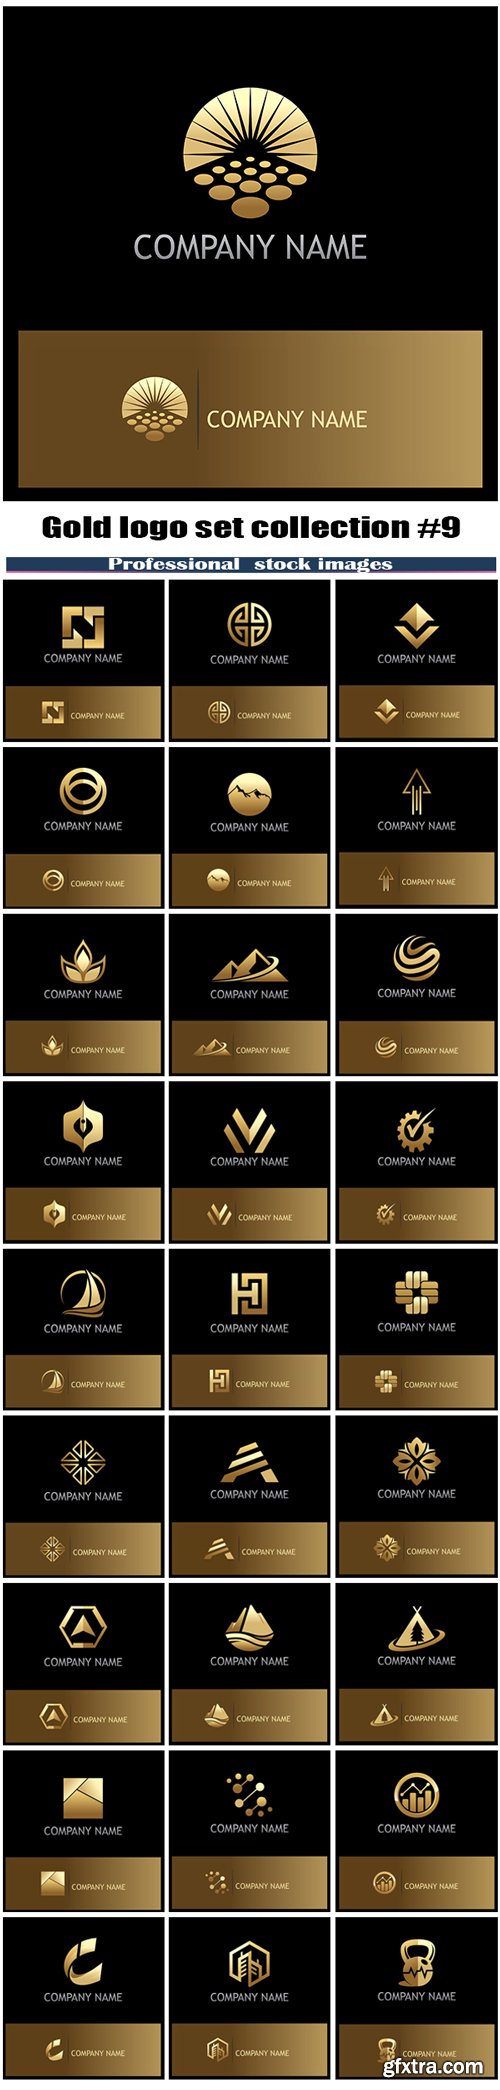 Gold logo set collection #9